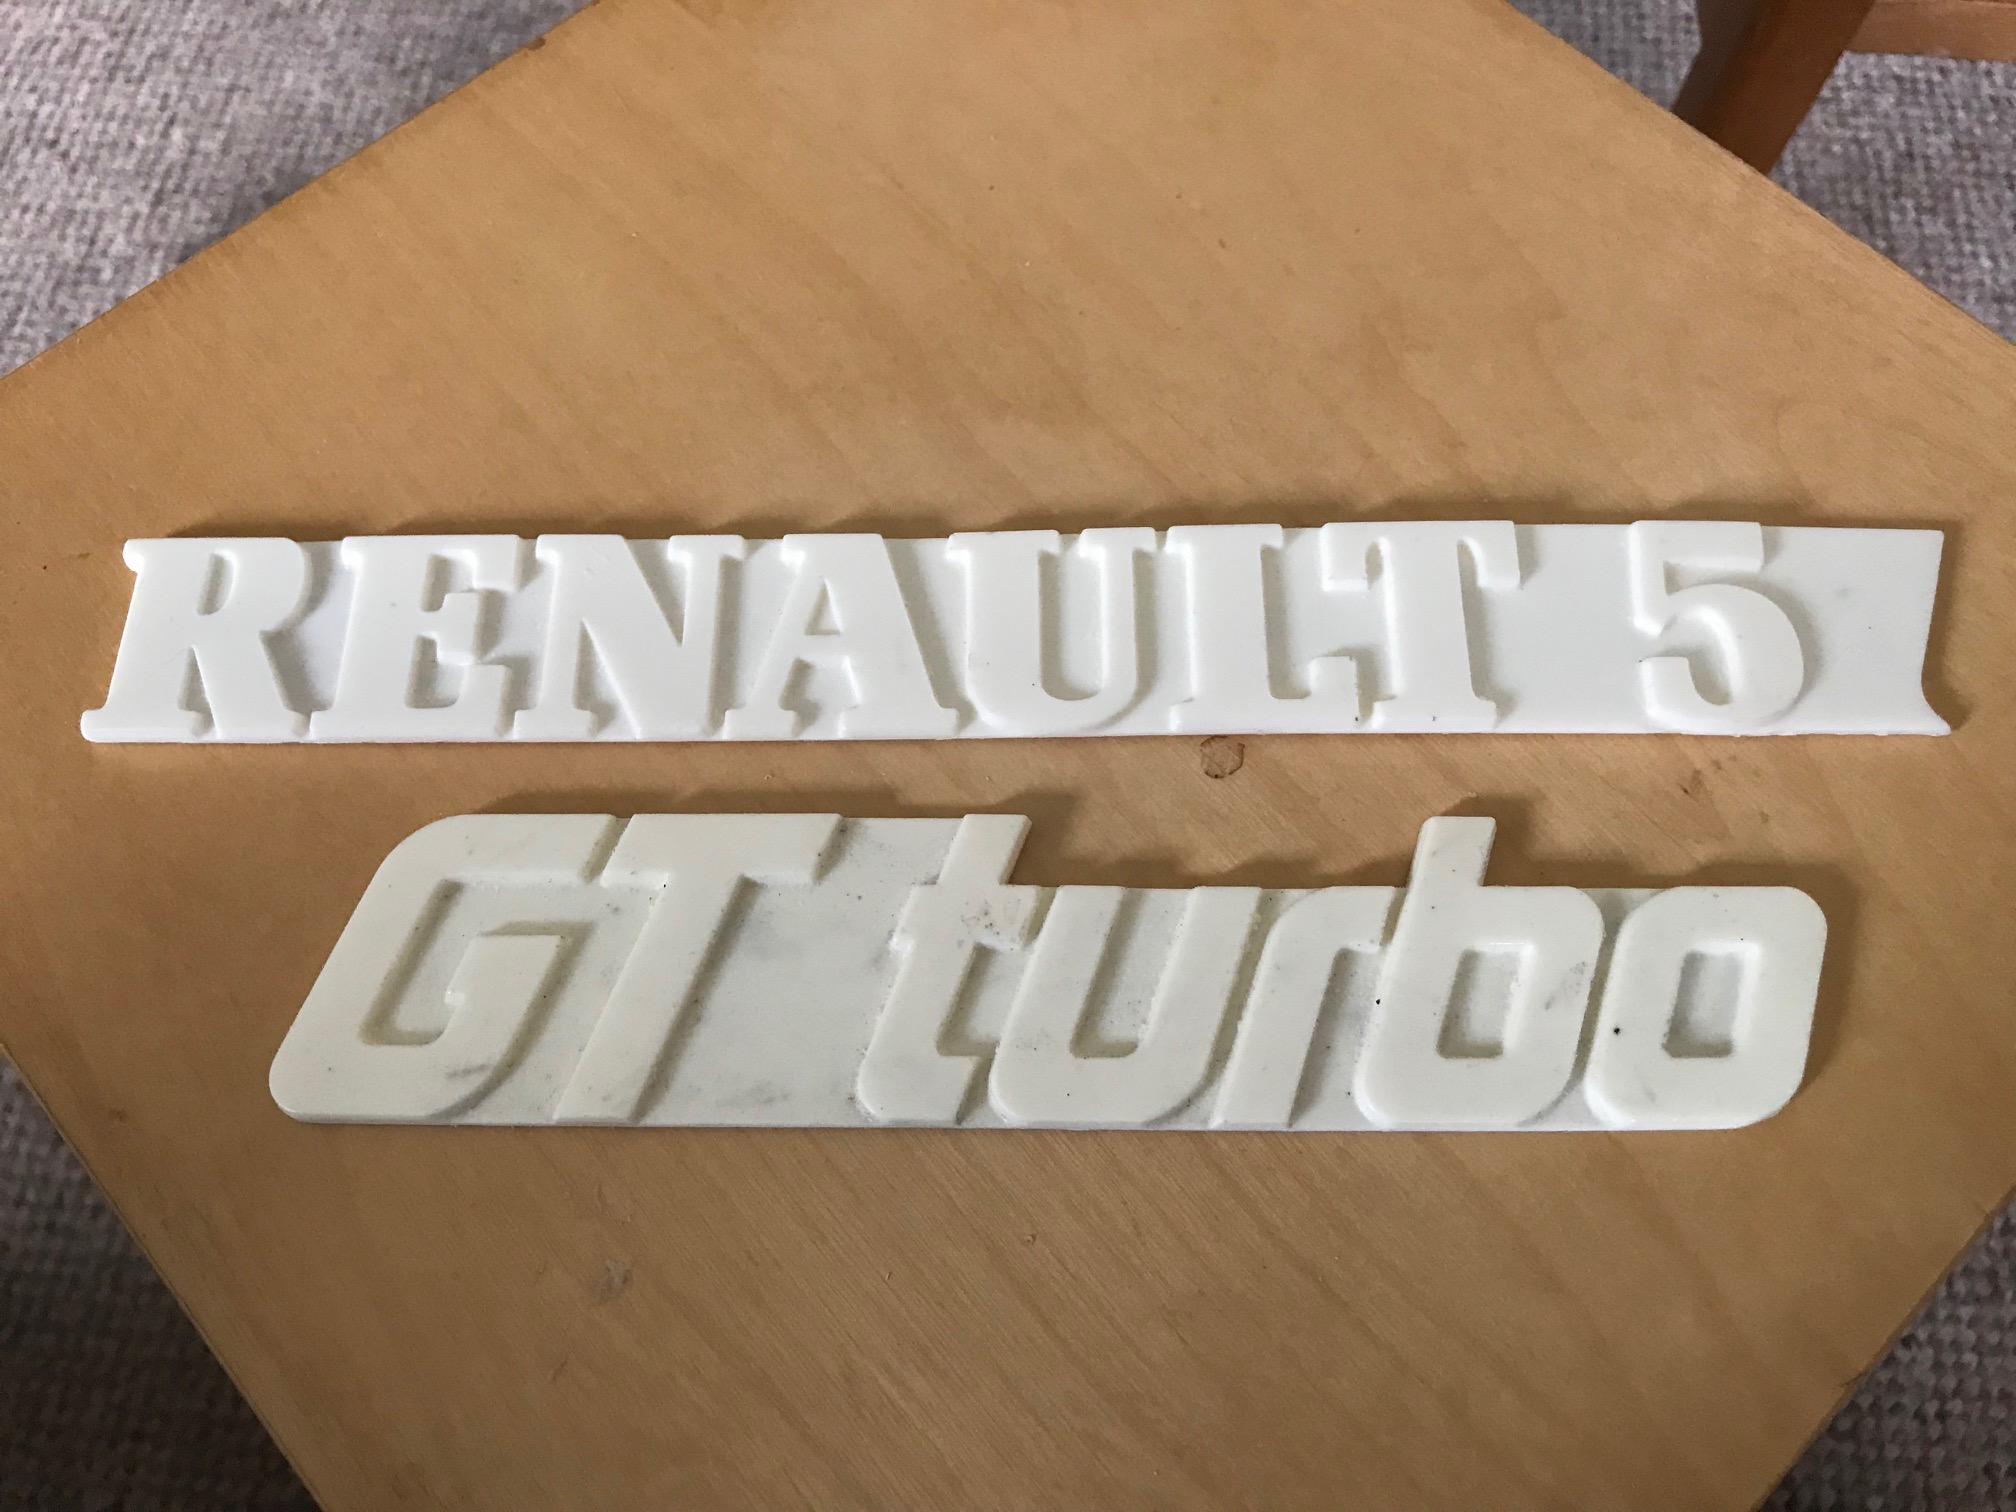 Renault 5 GT Turbo Rear GT Turbo badges